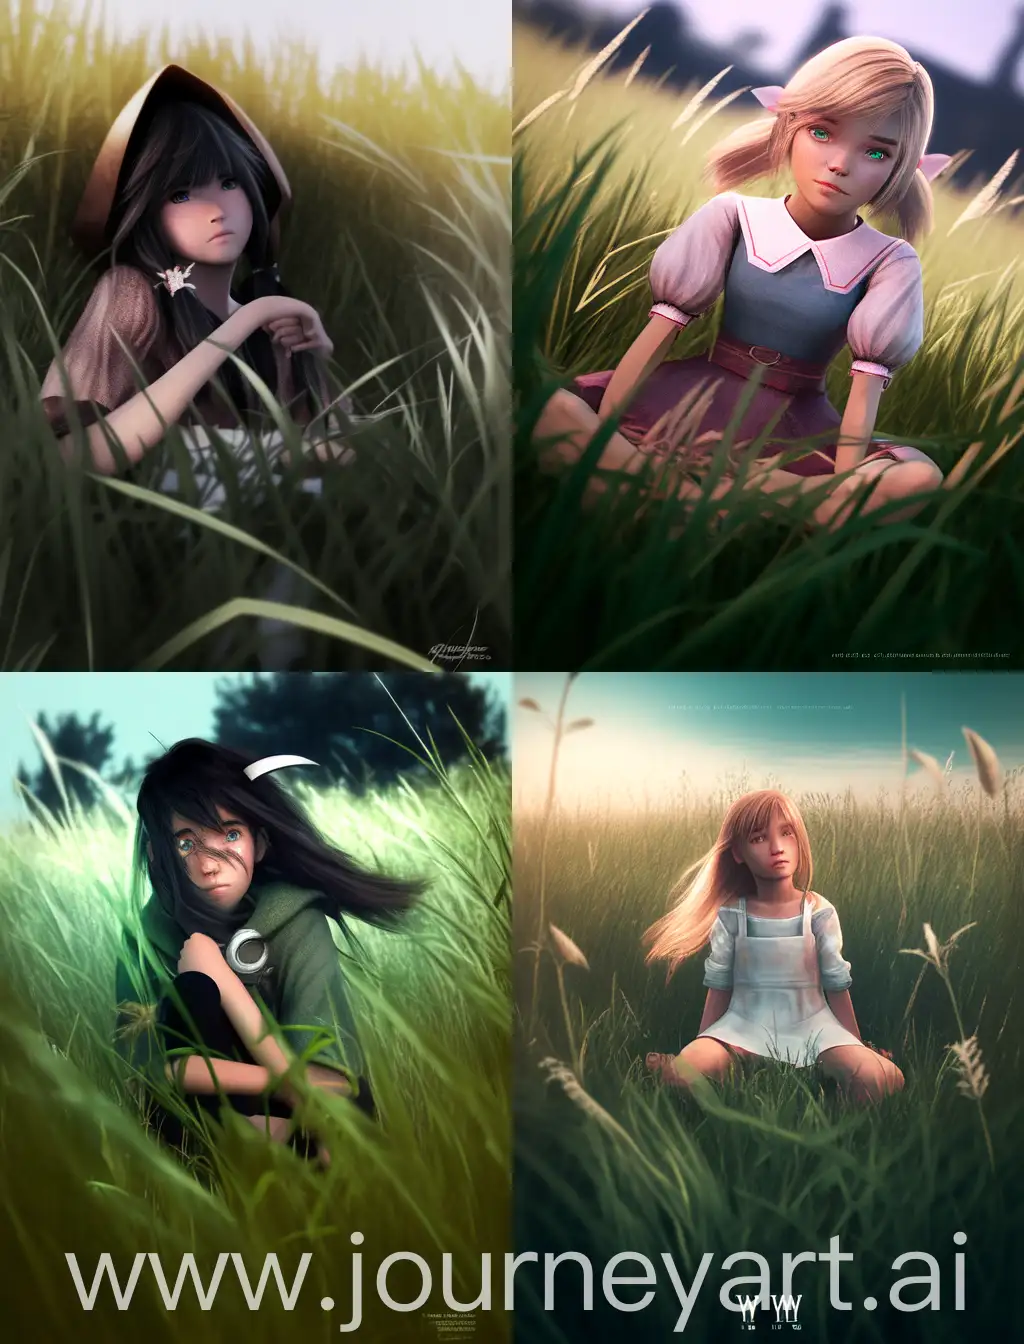 Sweet-Anime-Girl-Peeking-from-Tall-Grass-in-Surreal-Field